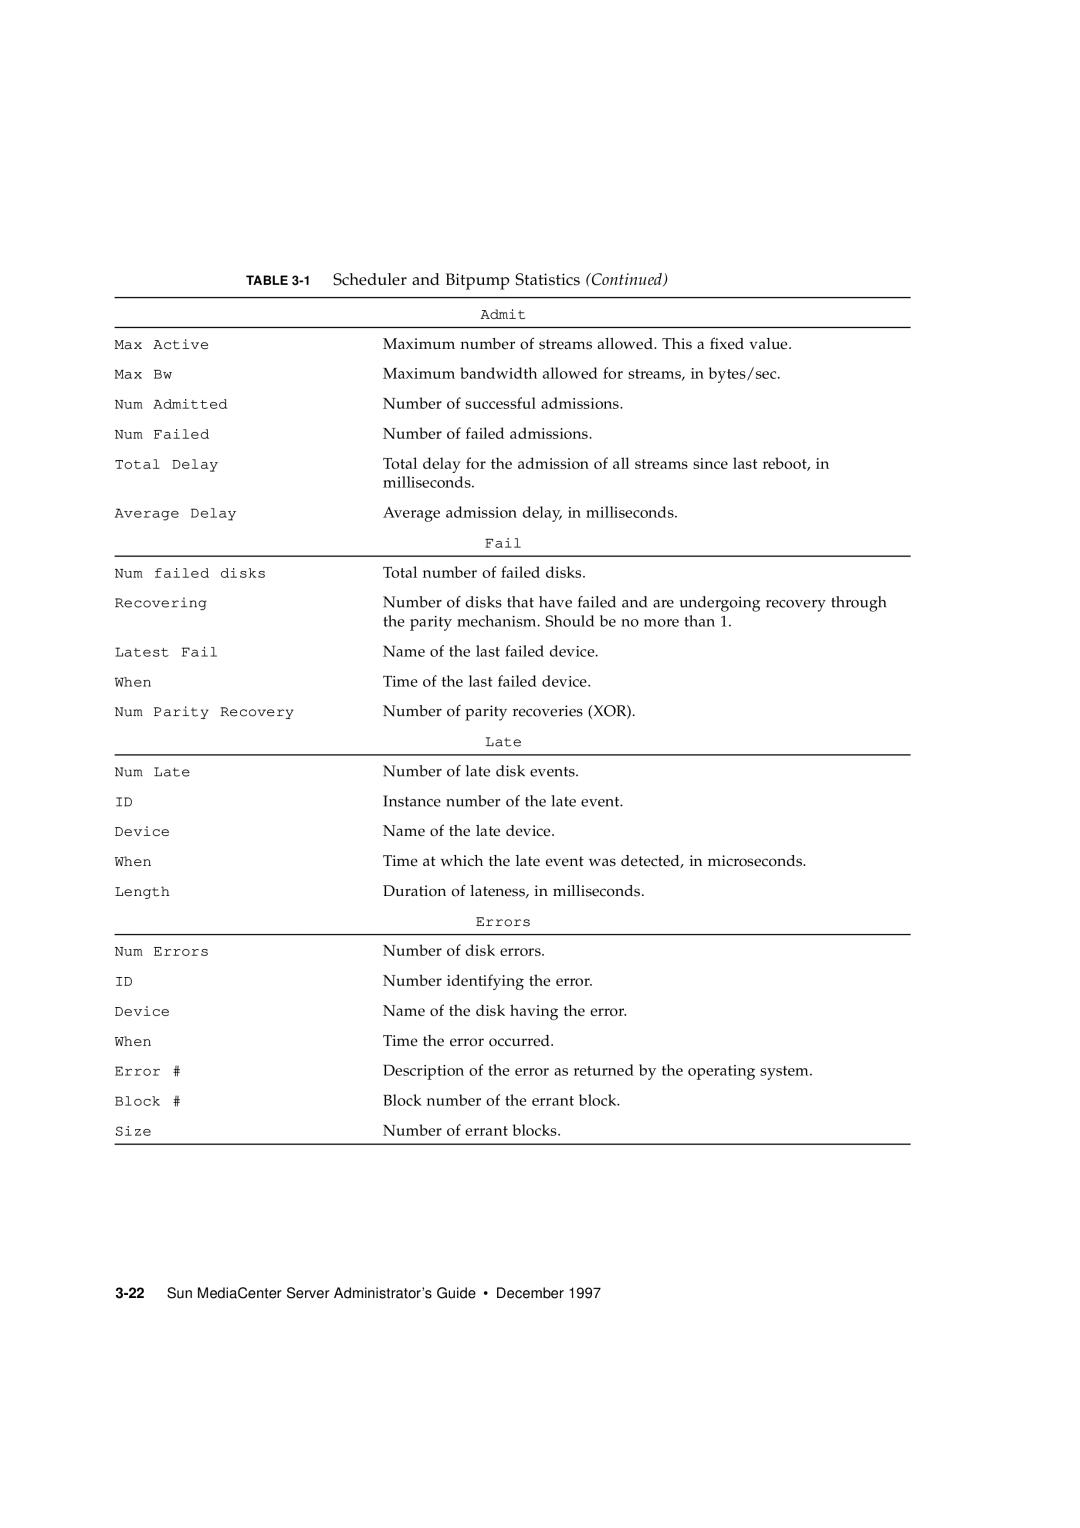 Sun Microsystems 2.1 manual 1 Scheduler and Bitpump Statistics Continued 